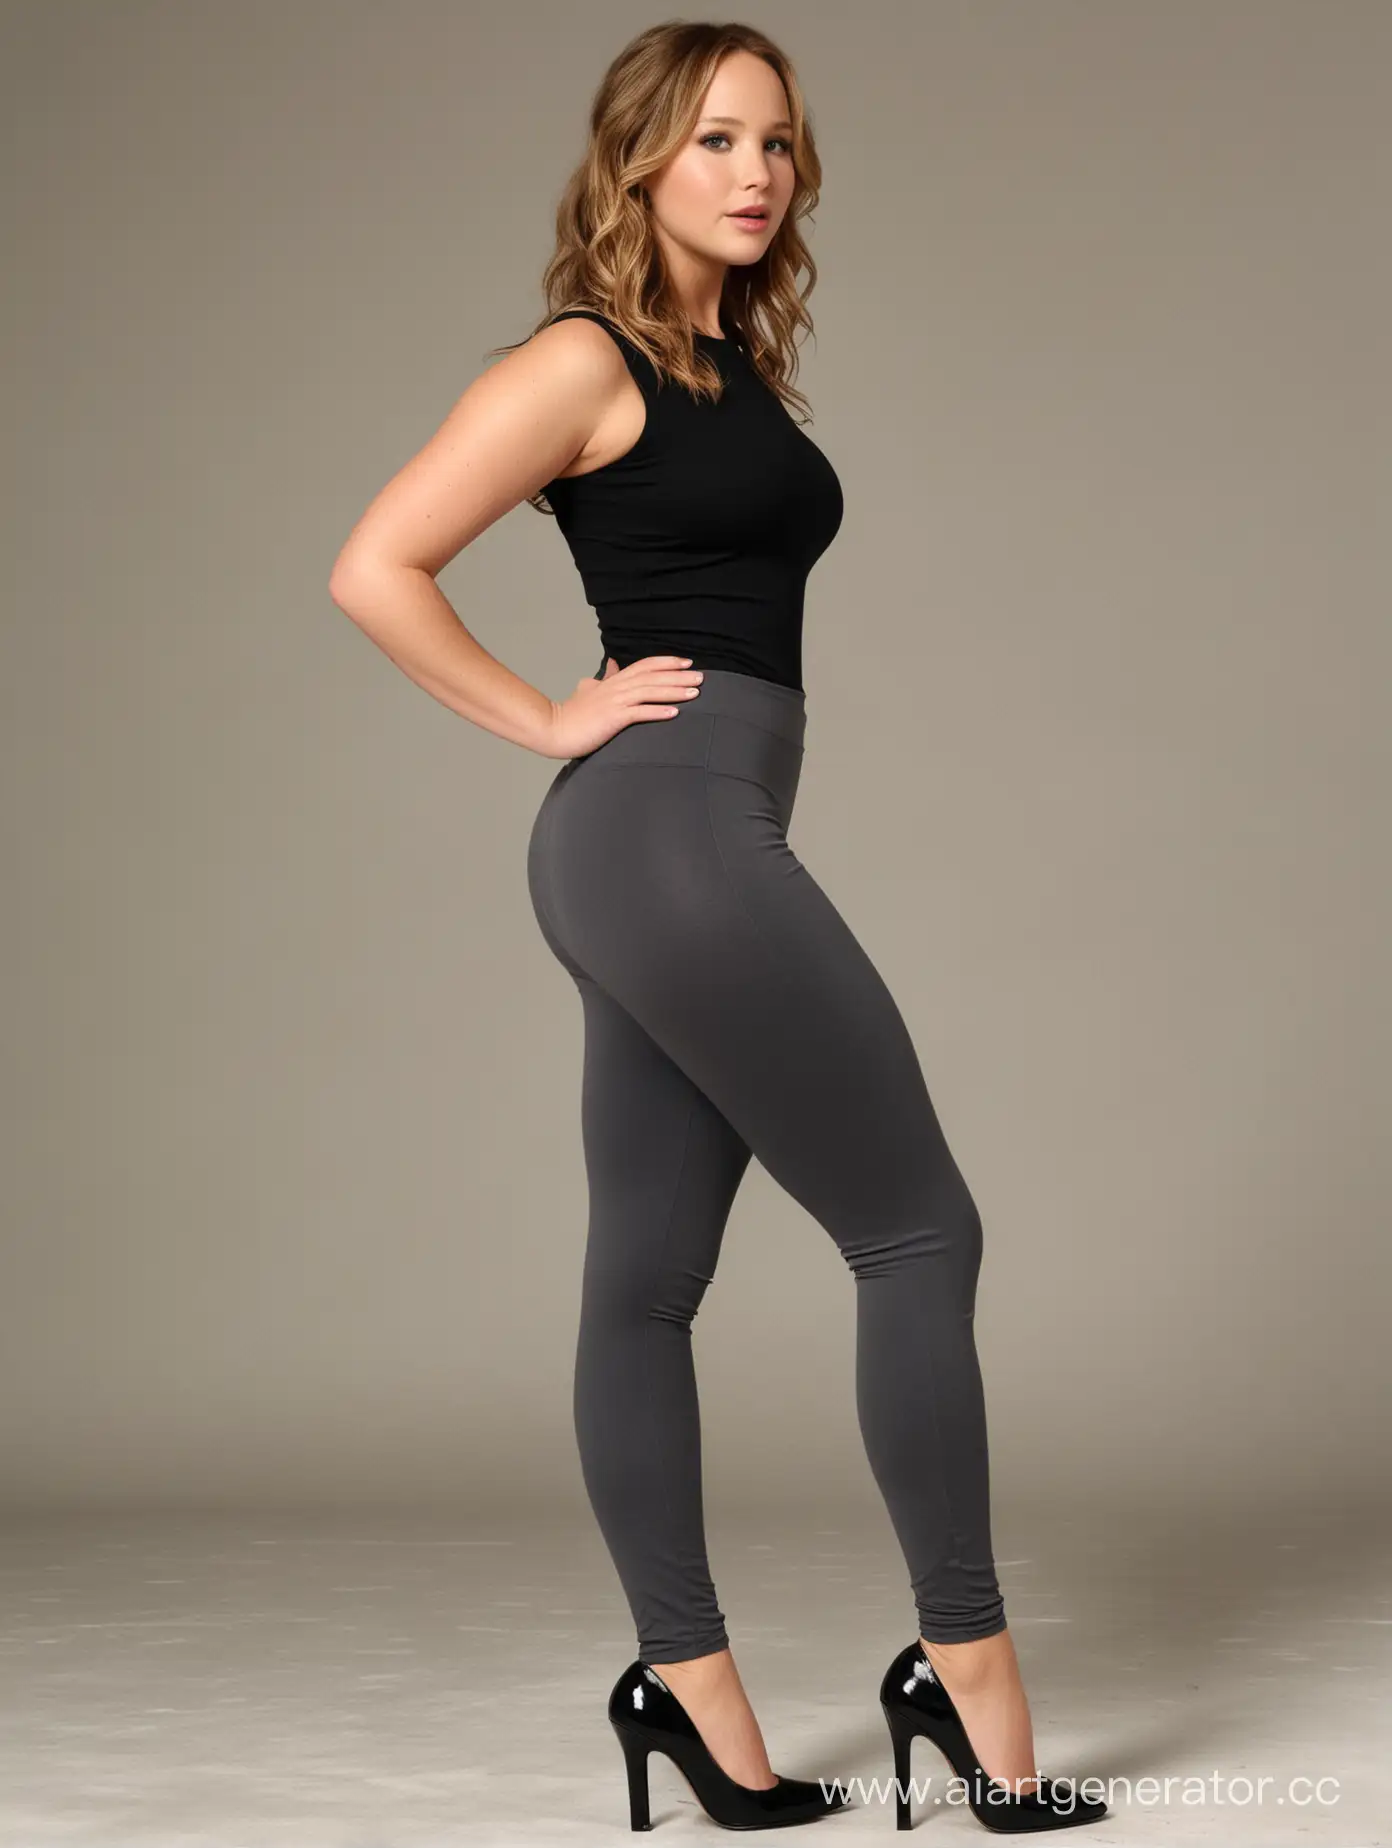 Sensational-Jennifer-Lawrence-Posing-in-Stylish-Leggings-and-Heels